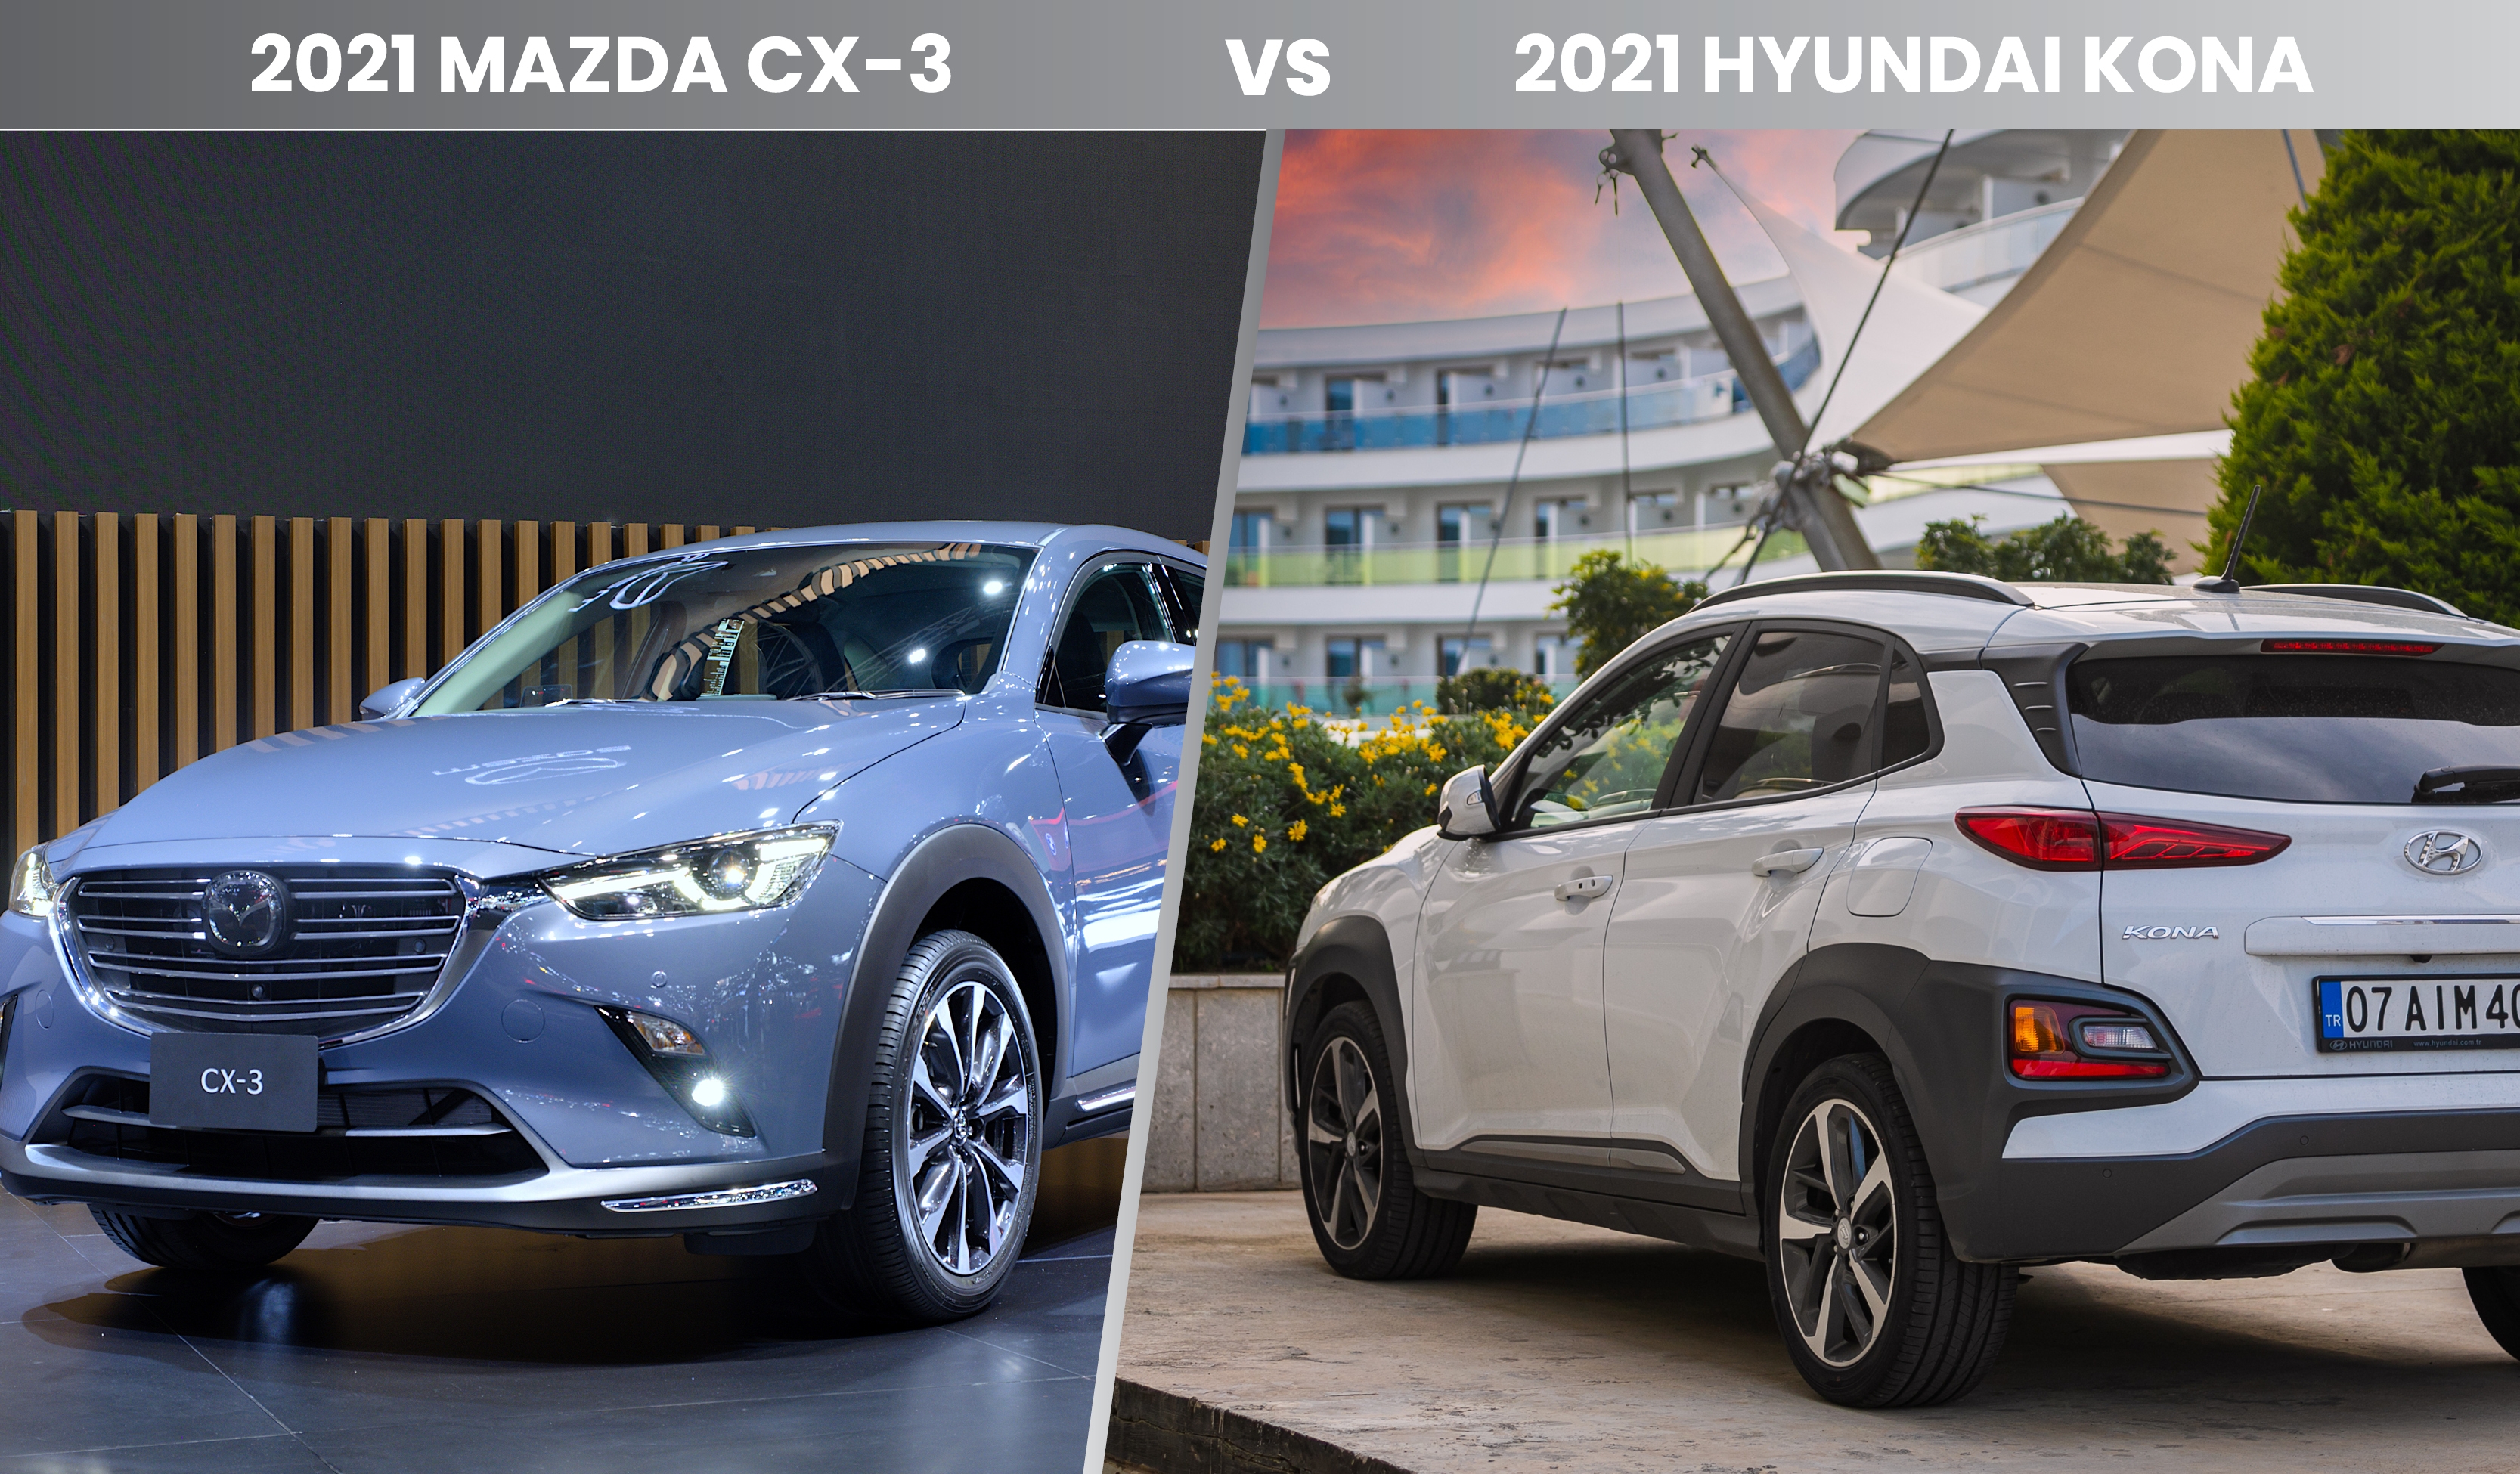 Mazda CX-3 vs Hyundai Kona 2021